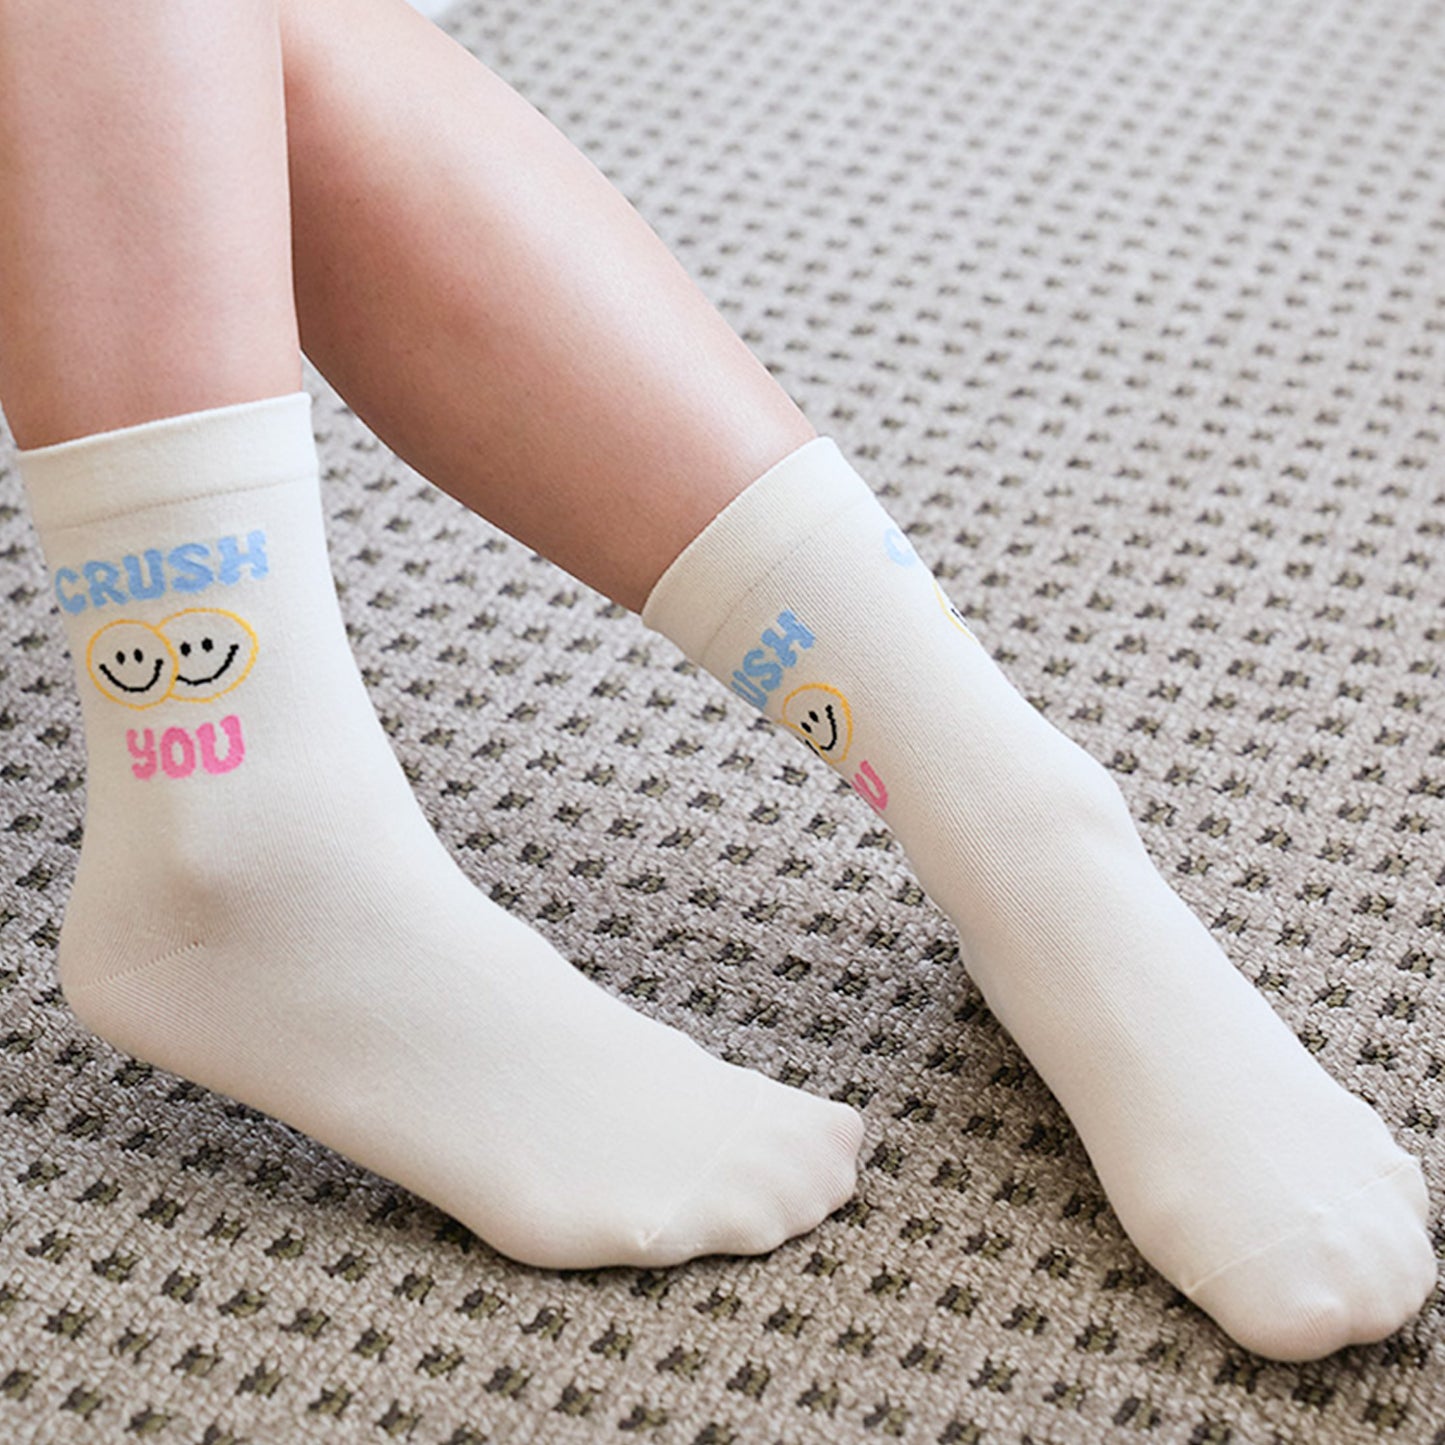 Women's Smile Culture Crew Socks